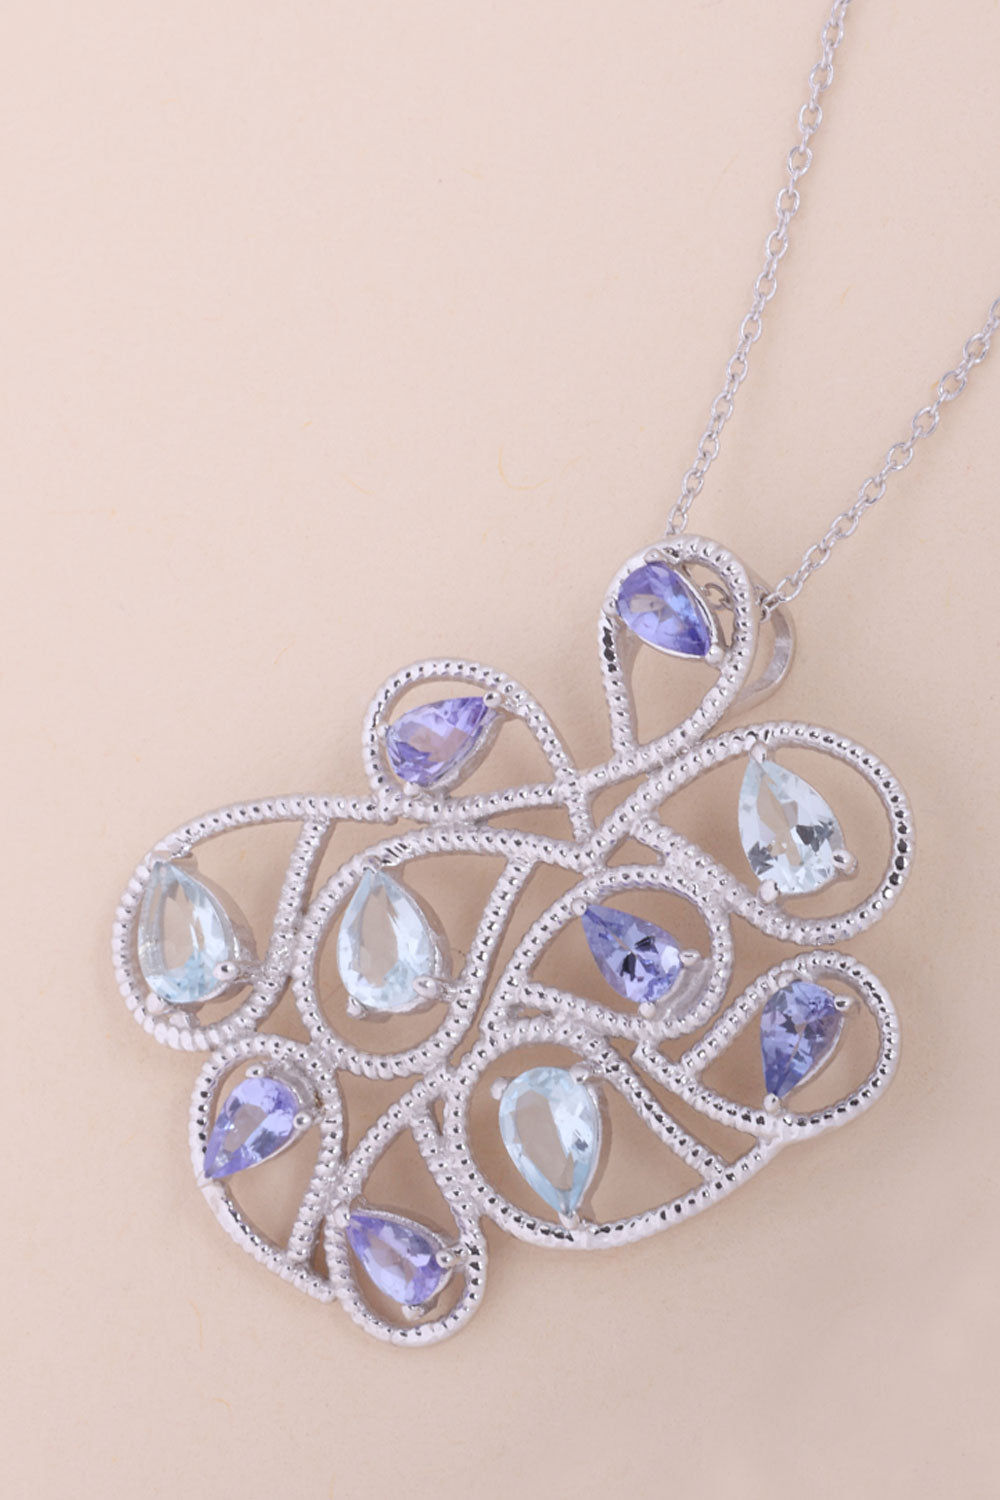 Aquamarine With Tanzanite Sterling Silver Necklace Pendant Chain - Avishya